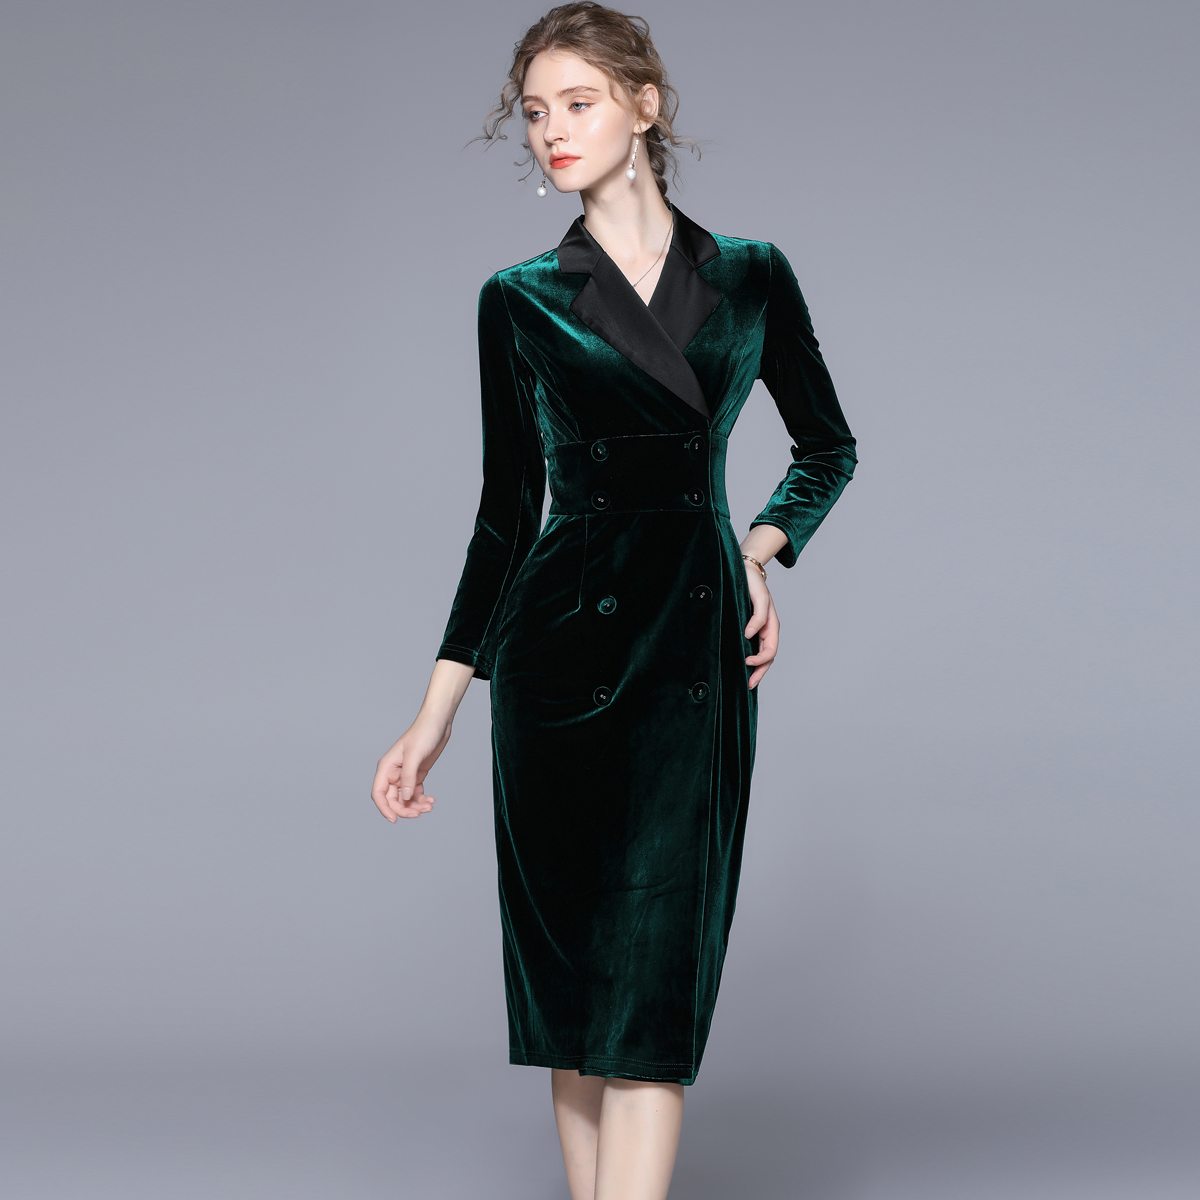 Exceed knee slim green coat velvet pinched waist dress